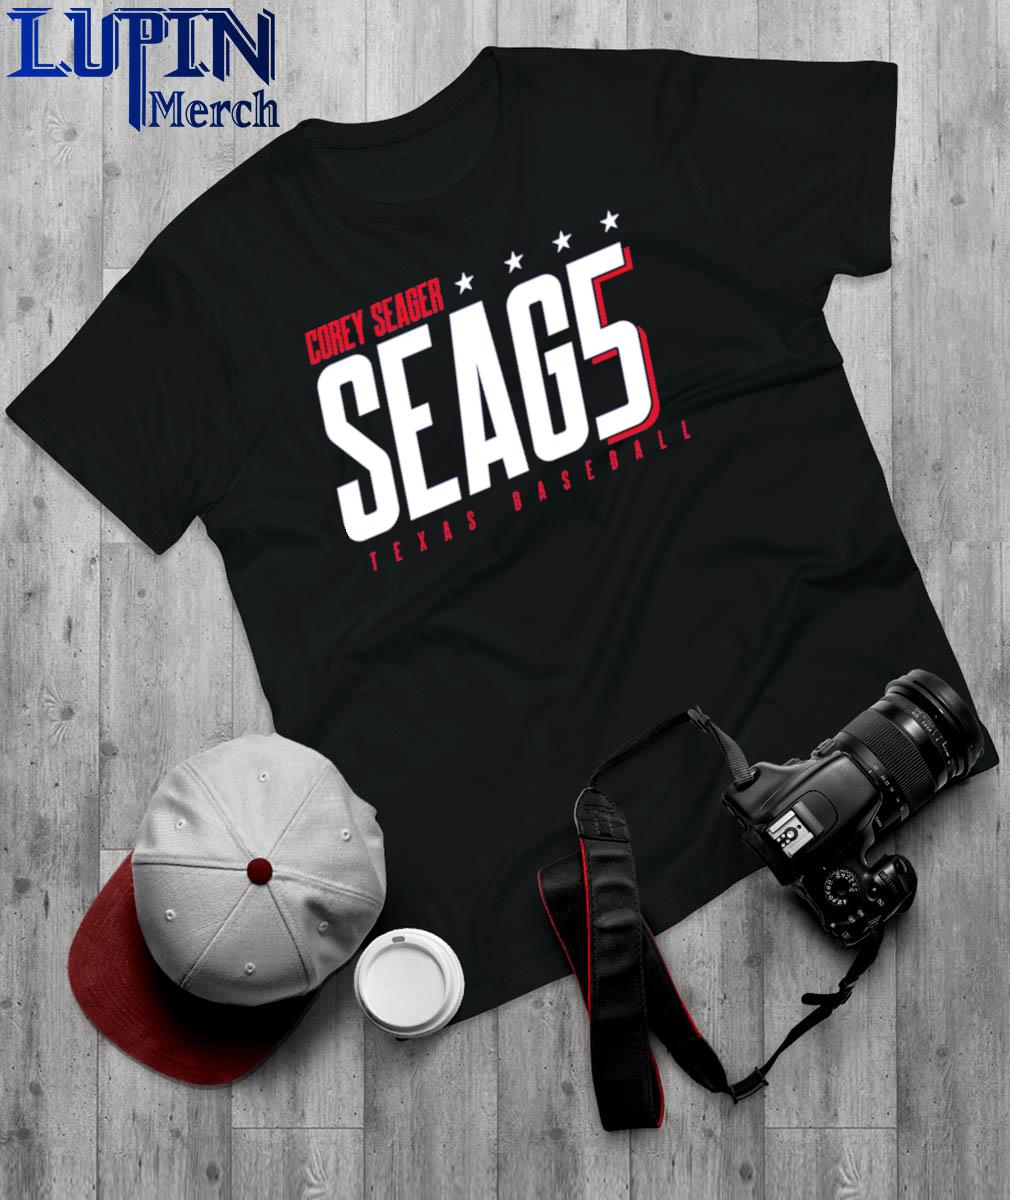 Corey Seager Seag5 Texas Baseball Shirt - Peanutstee